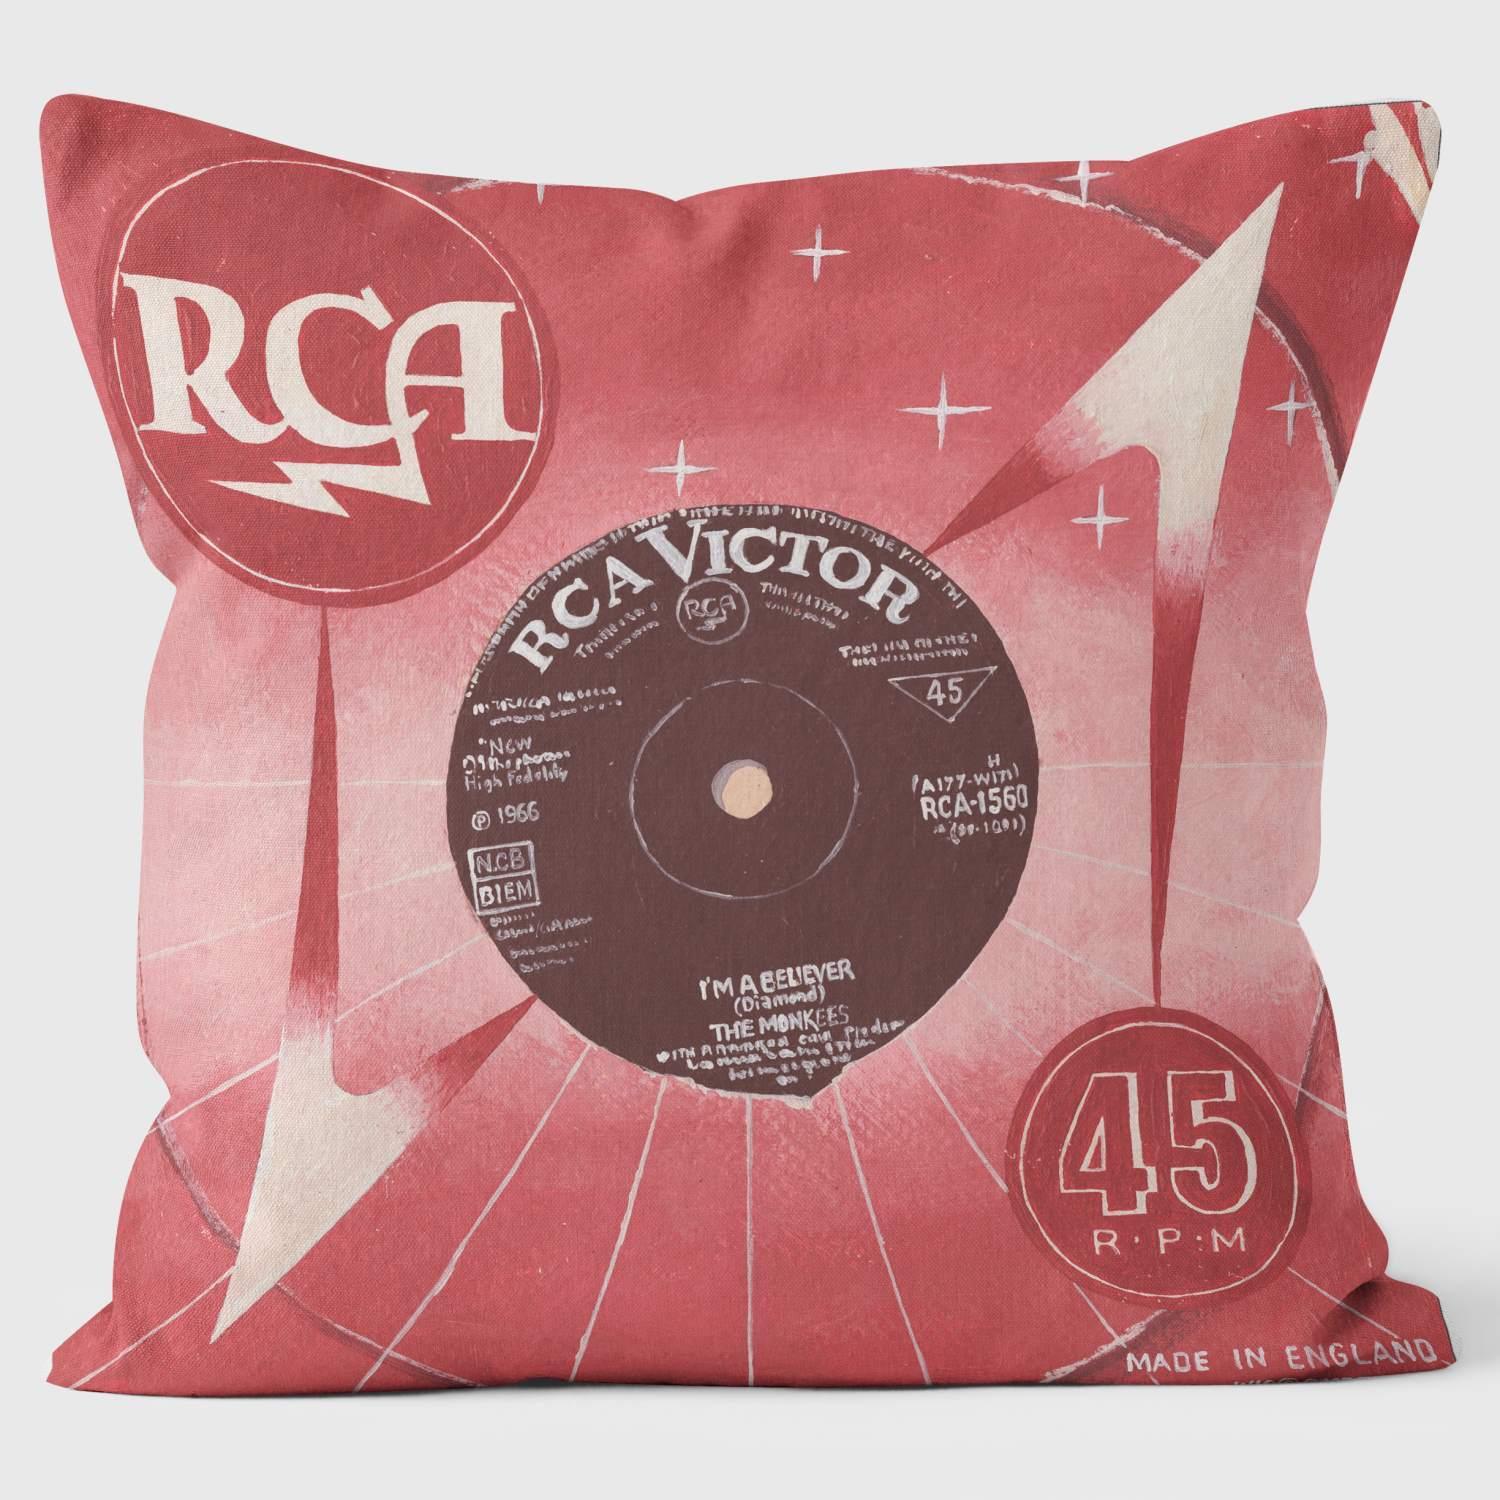 Im A Believer RCA Cushion - Martin Wiscombe - Classic Singles Pillows - Handmade Cushions UK - WeLoveCushions